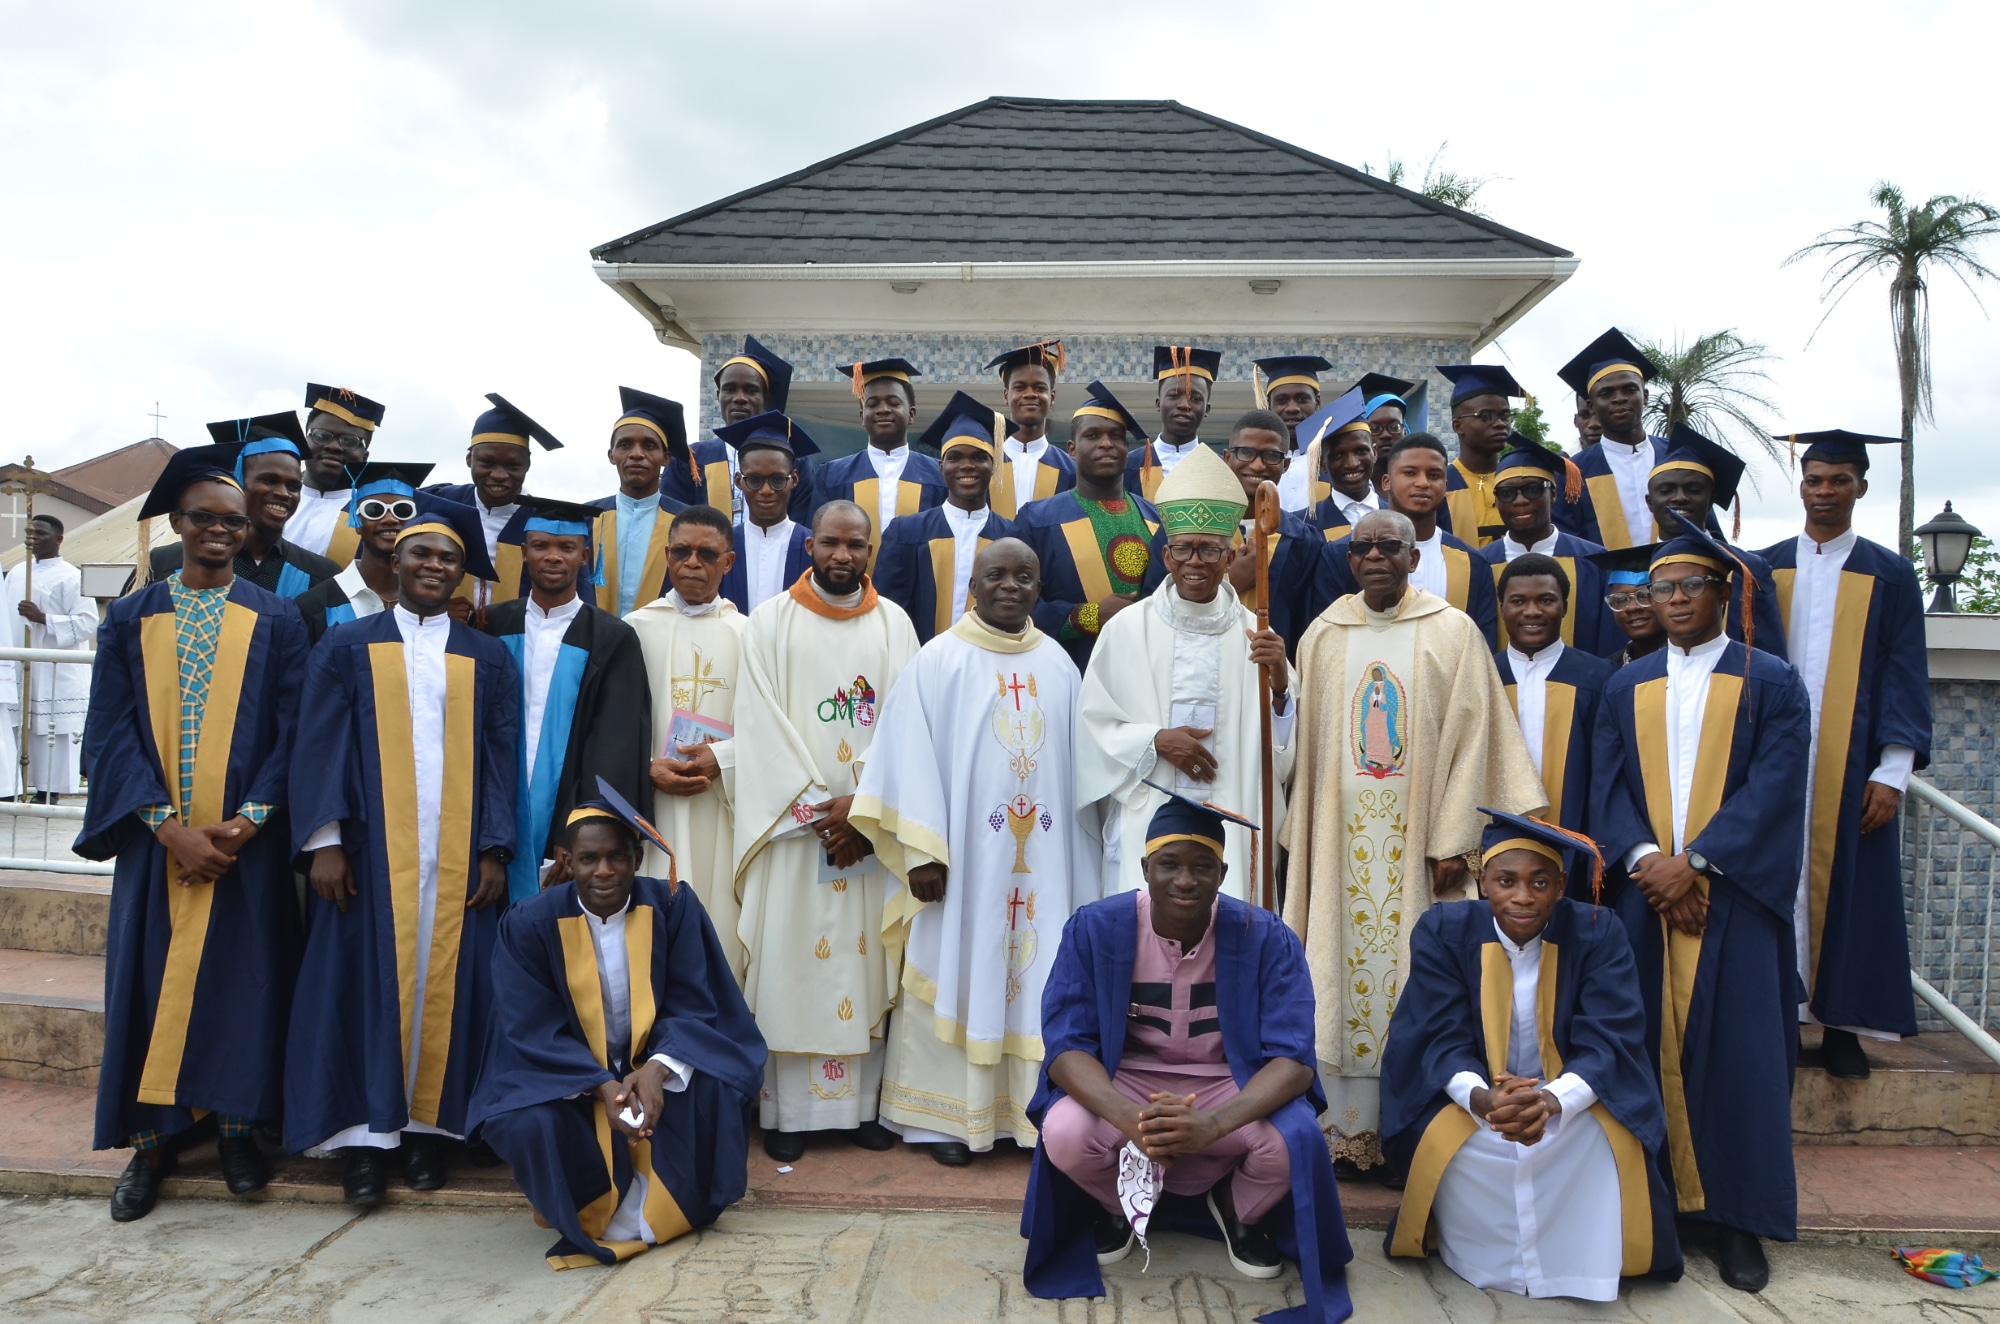 CLARETIAN UNIVERSITY OF NIGERIA HOLDS MAIDEN MATRICULATION CEREMONY